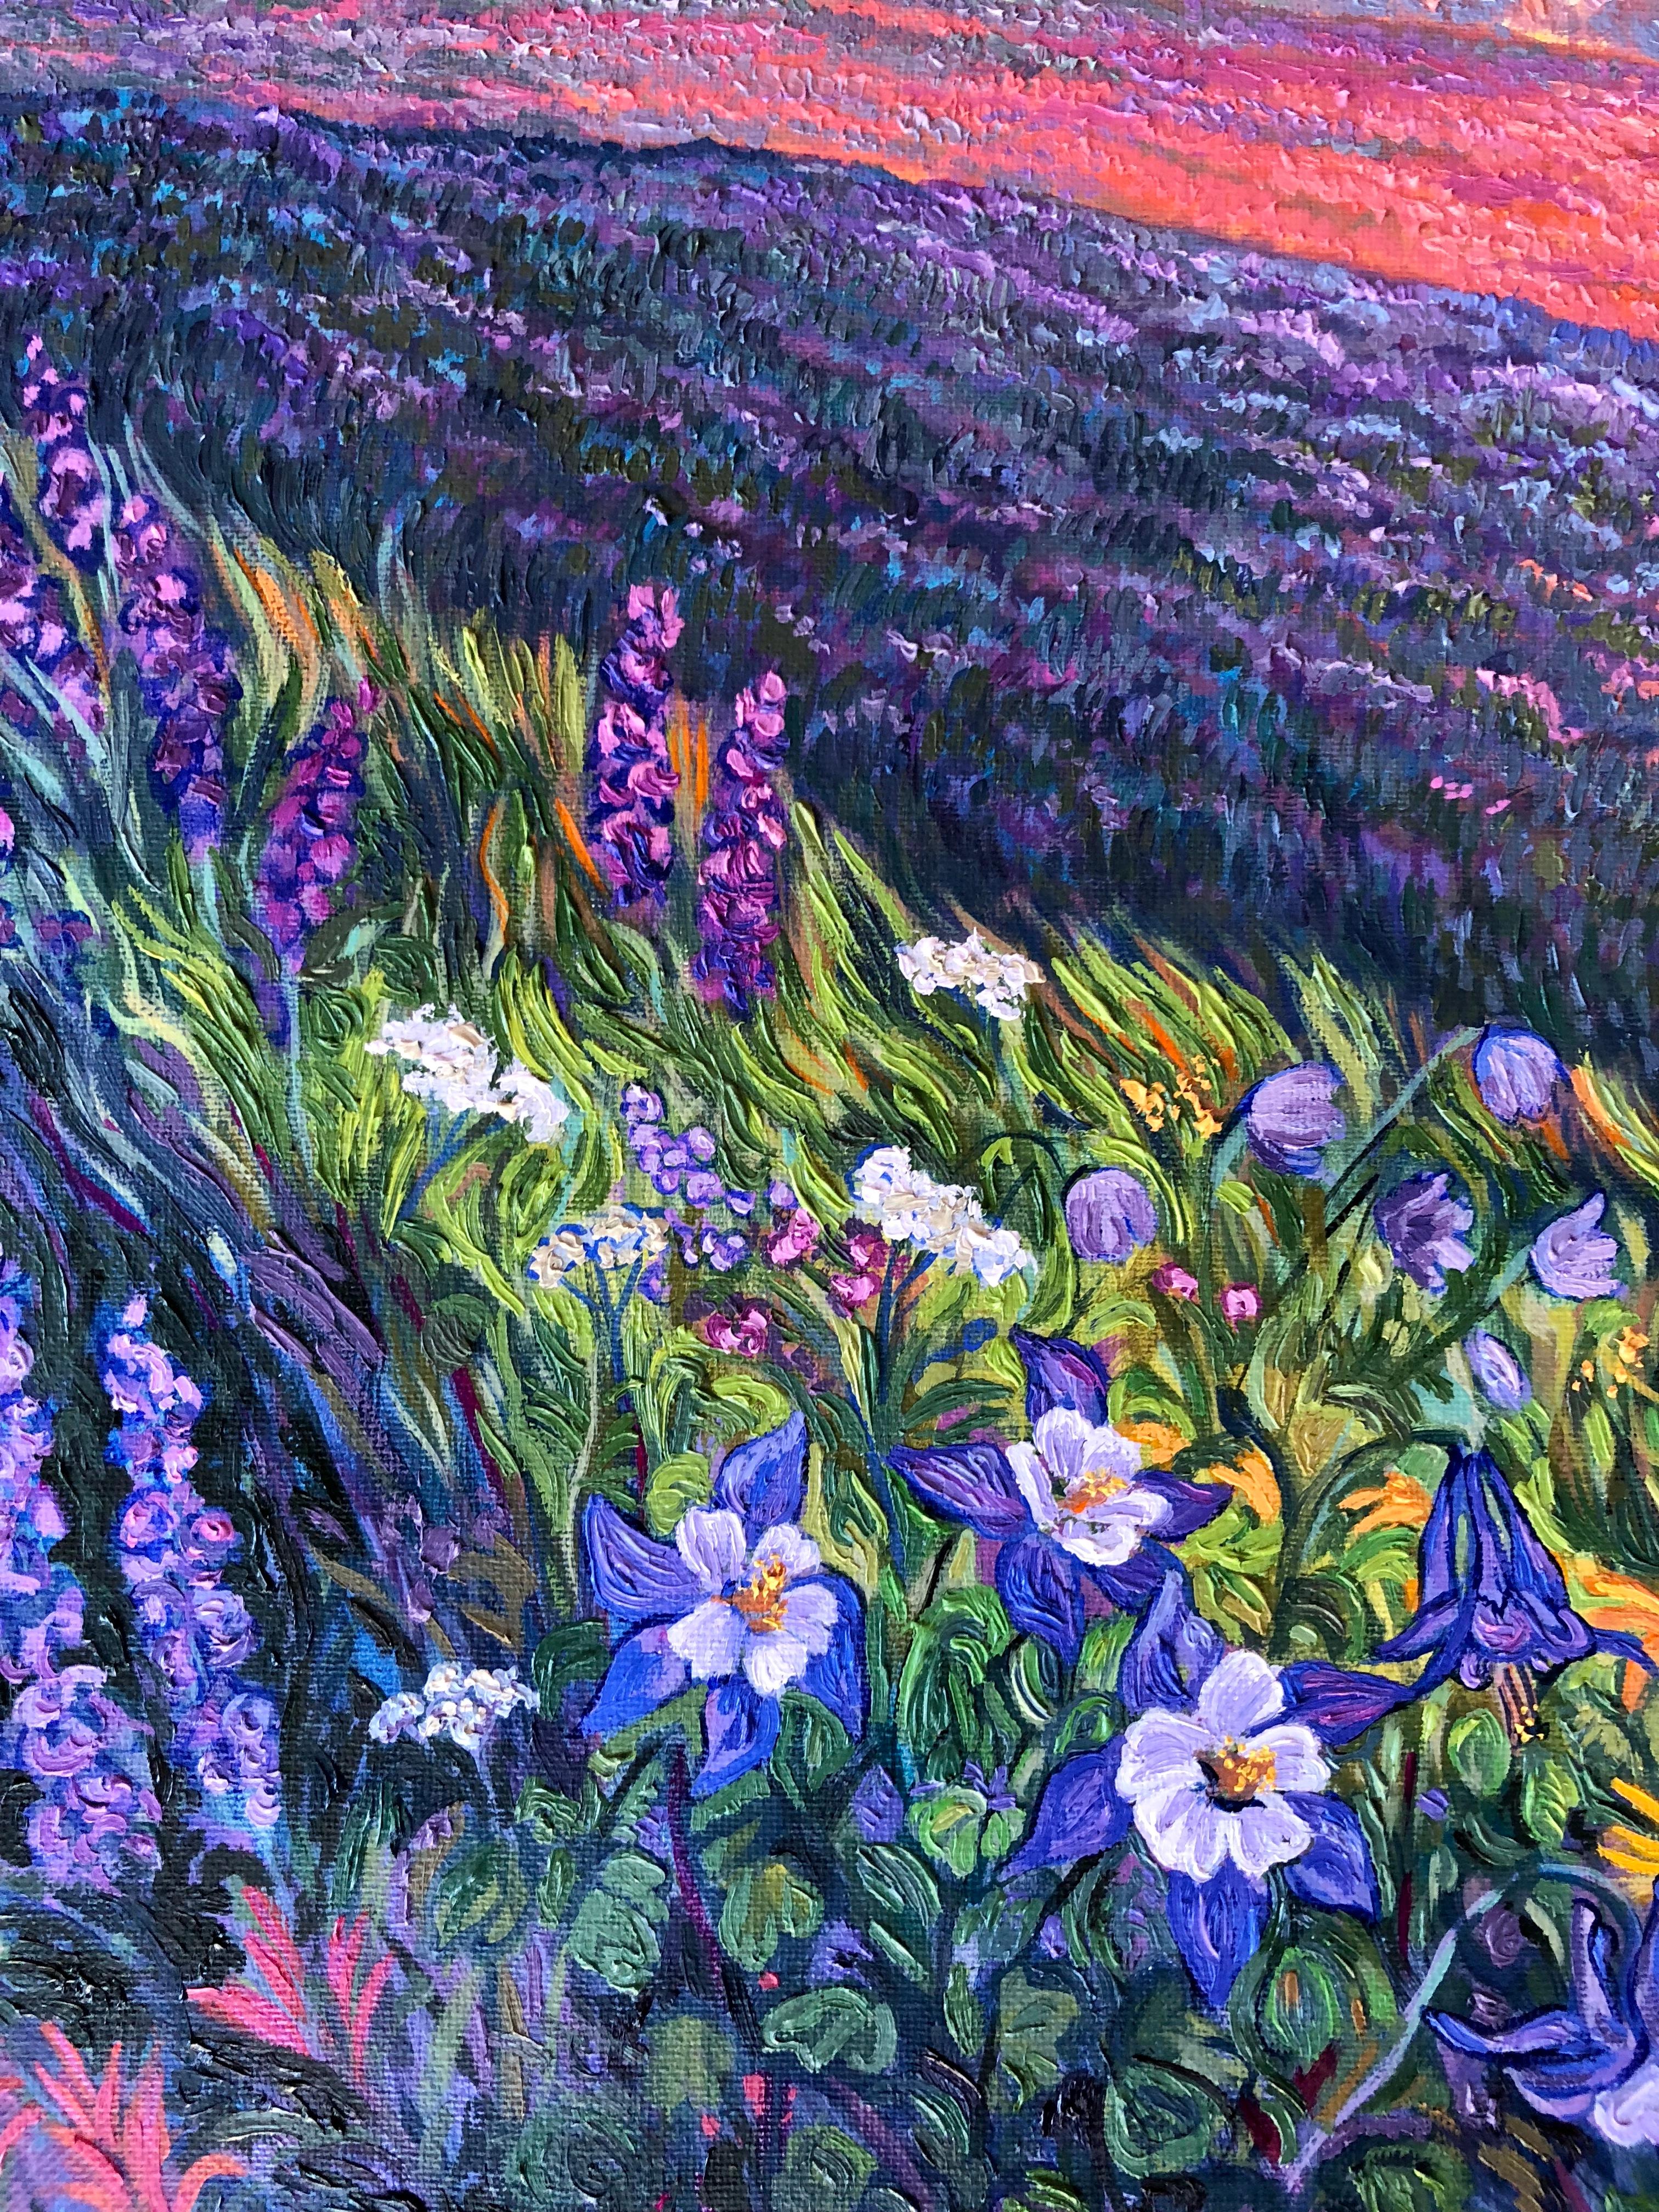 Wildflower Valley - Impressionist Painting by Anna Widmer